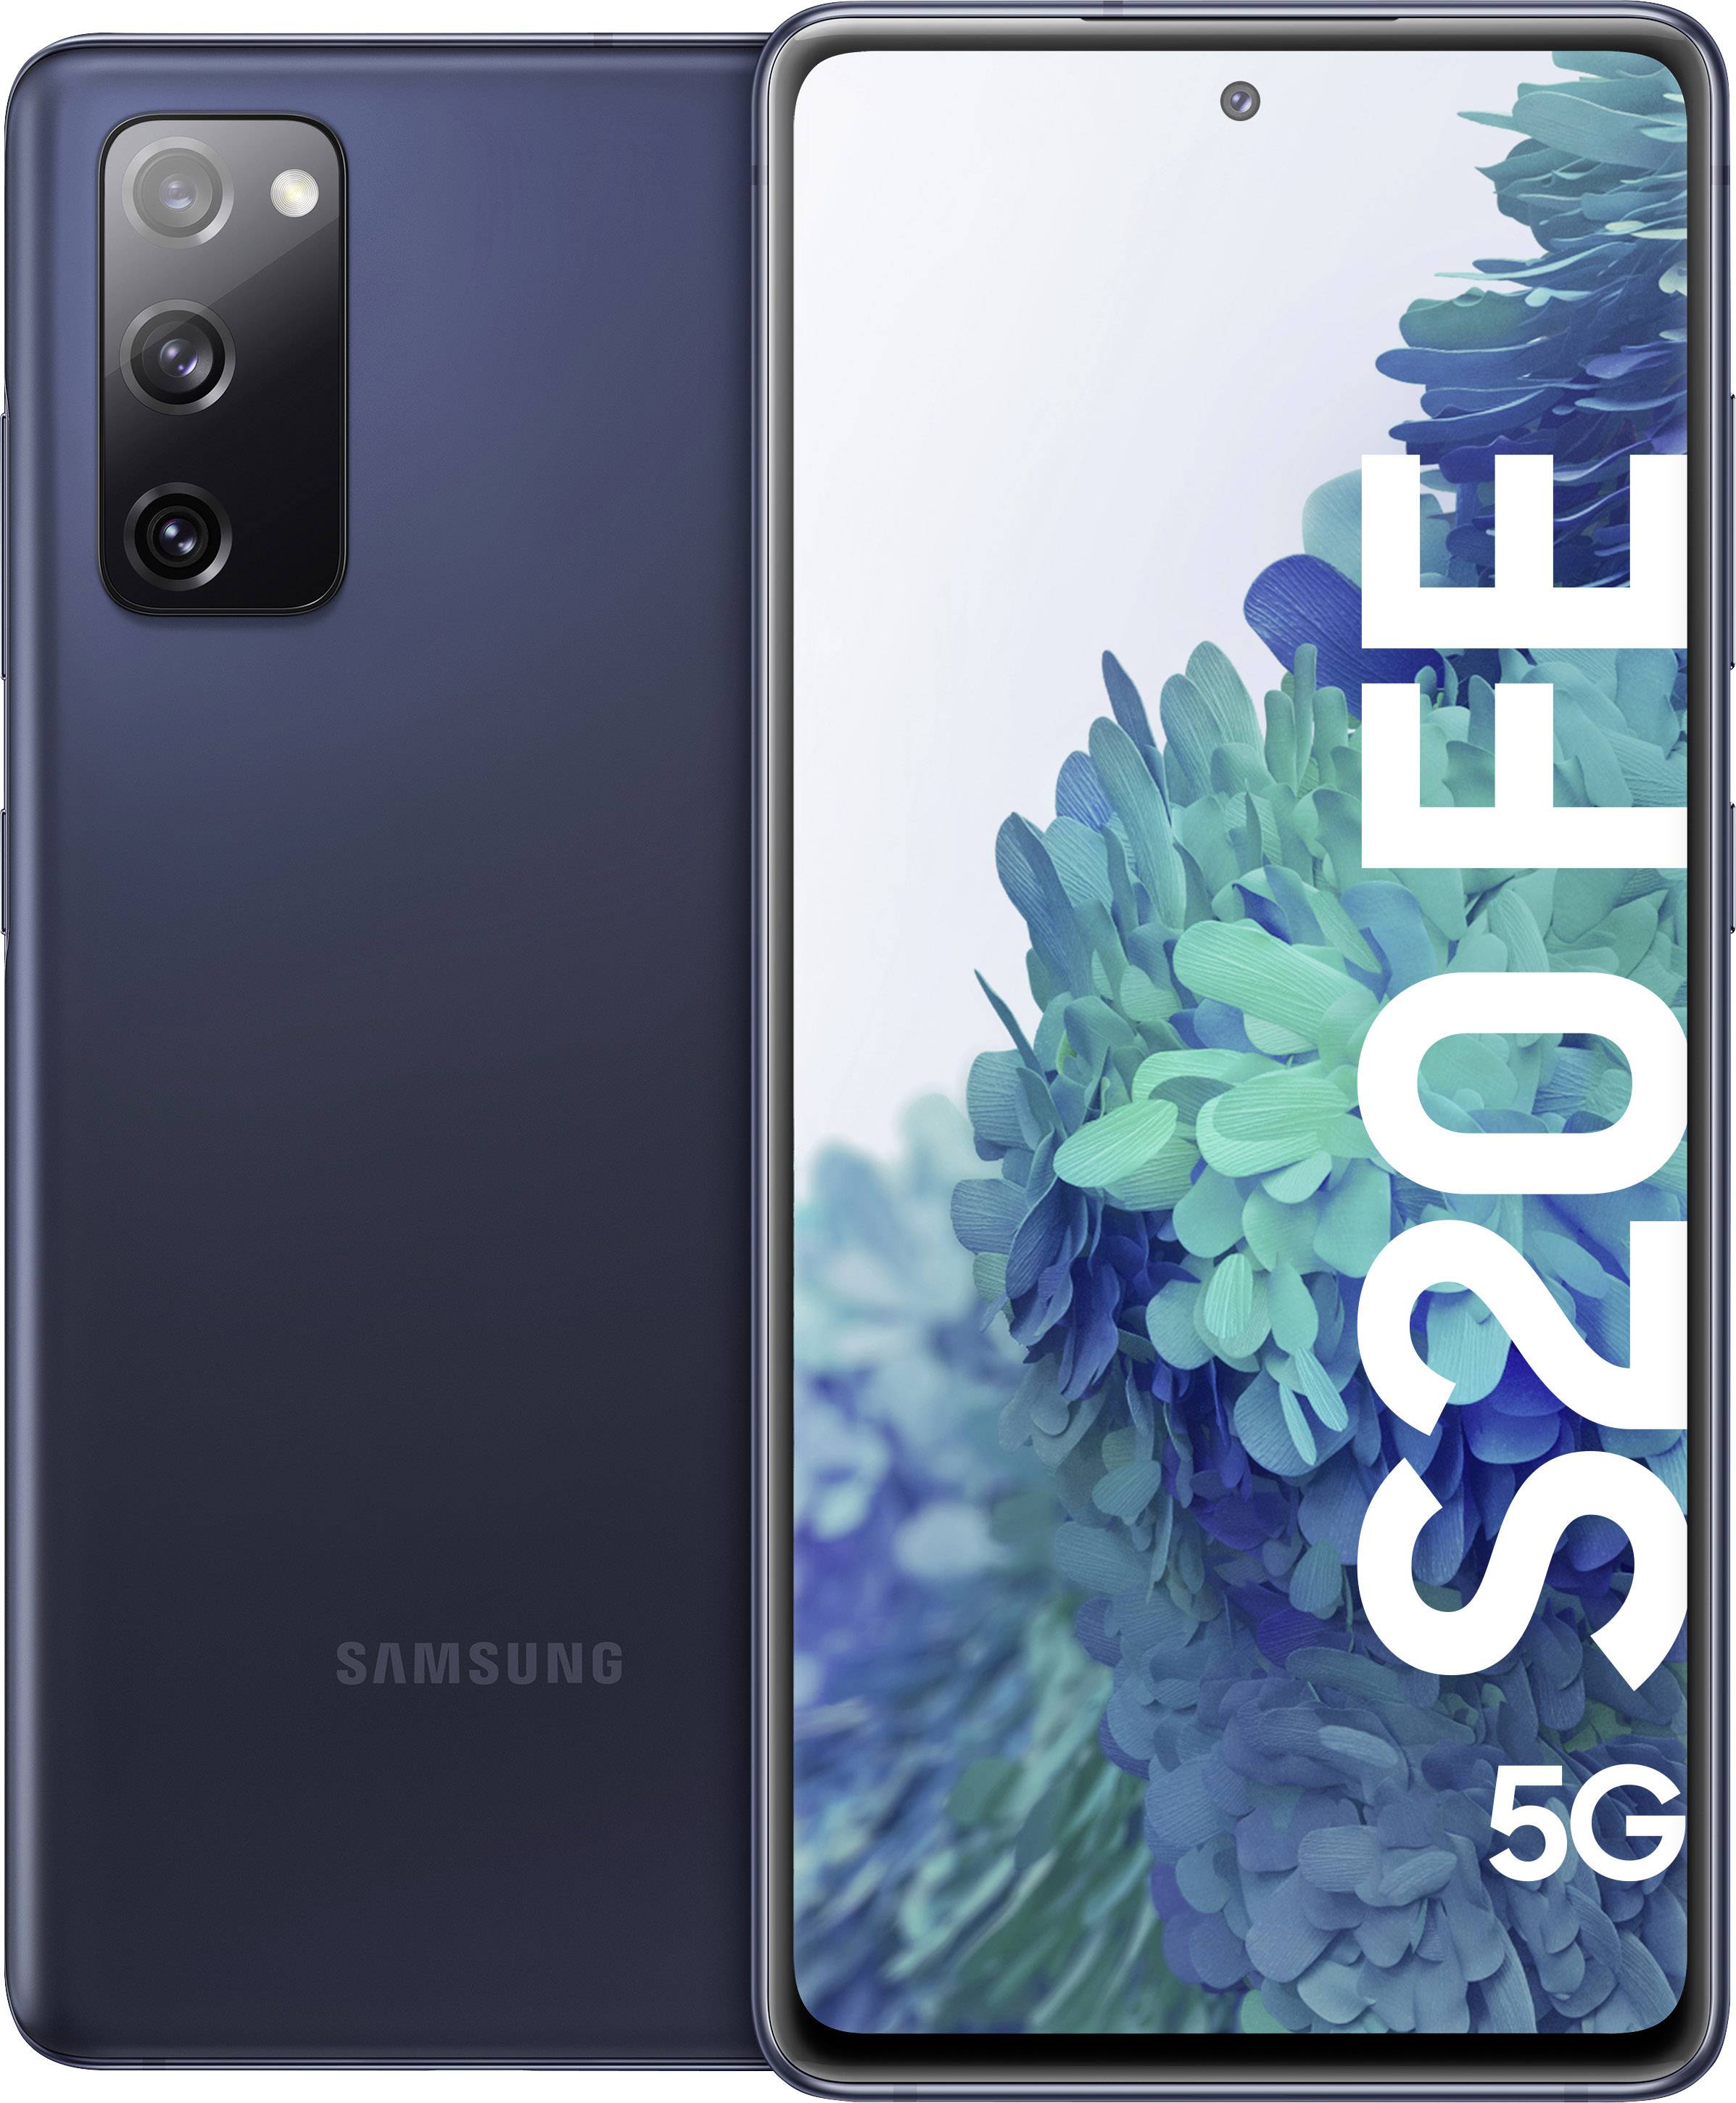 Samsung Galaxy S Fe 5g 5g Smartphone 128 Gb 16 5 Cm 6 5 Inch Blue Android 10 Dual Sim Conrad Com